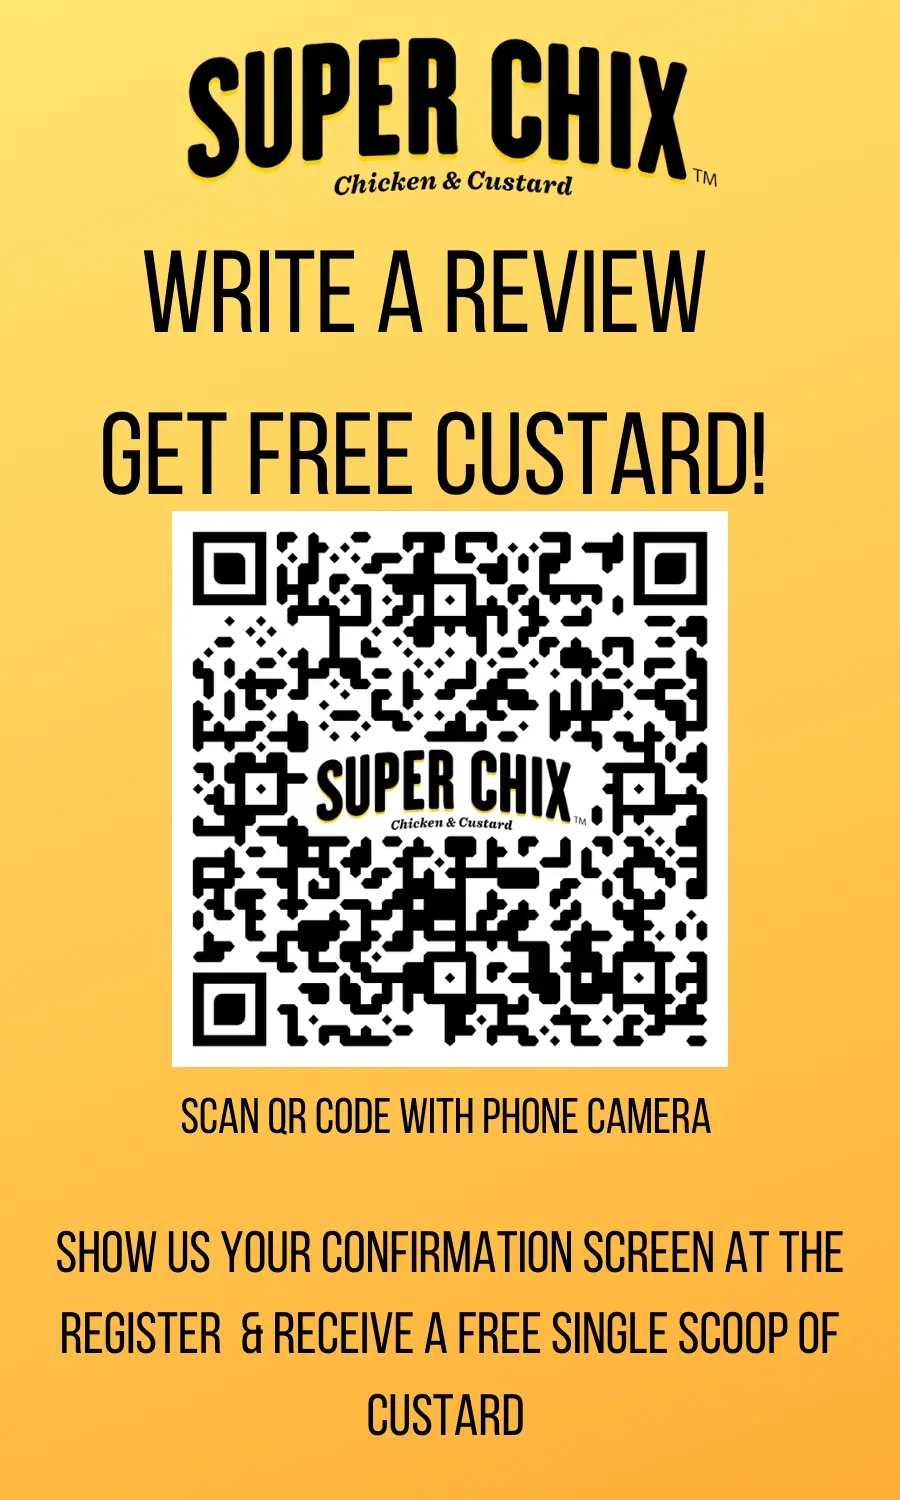 Write a Review, Get Free Custard